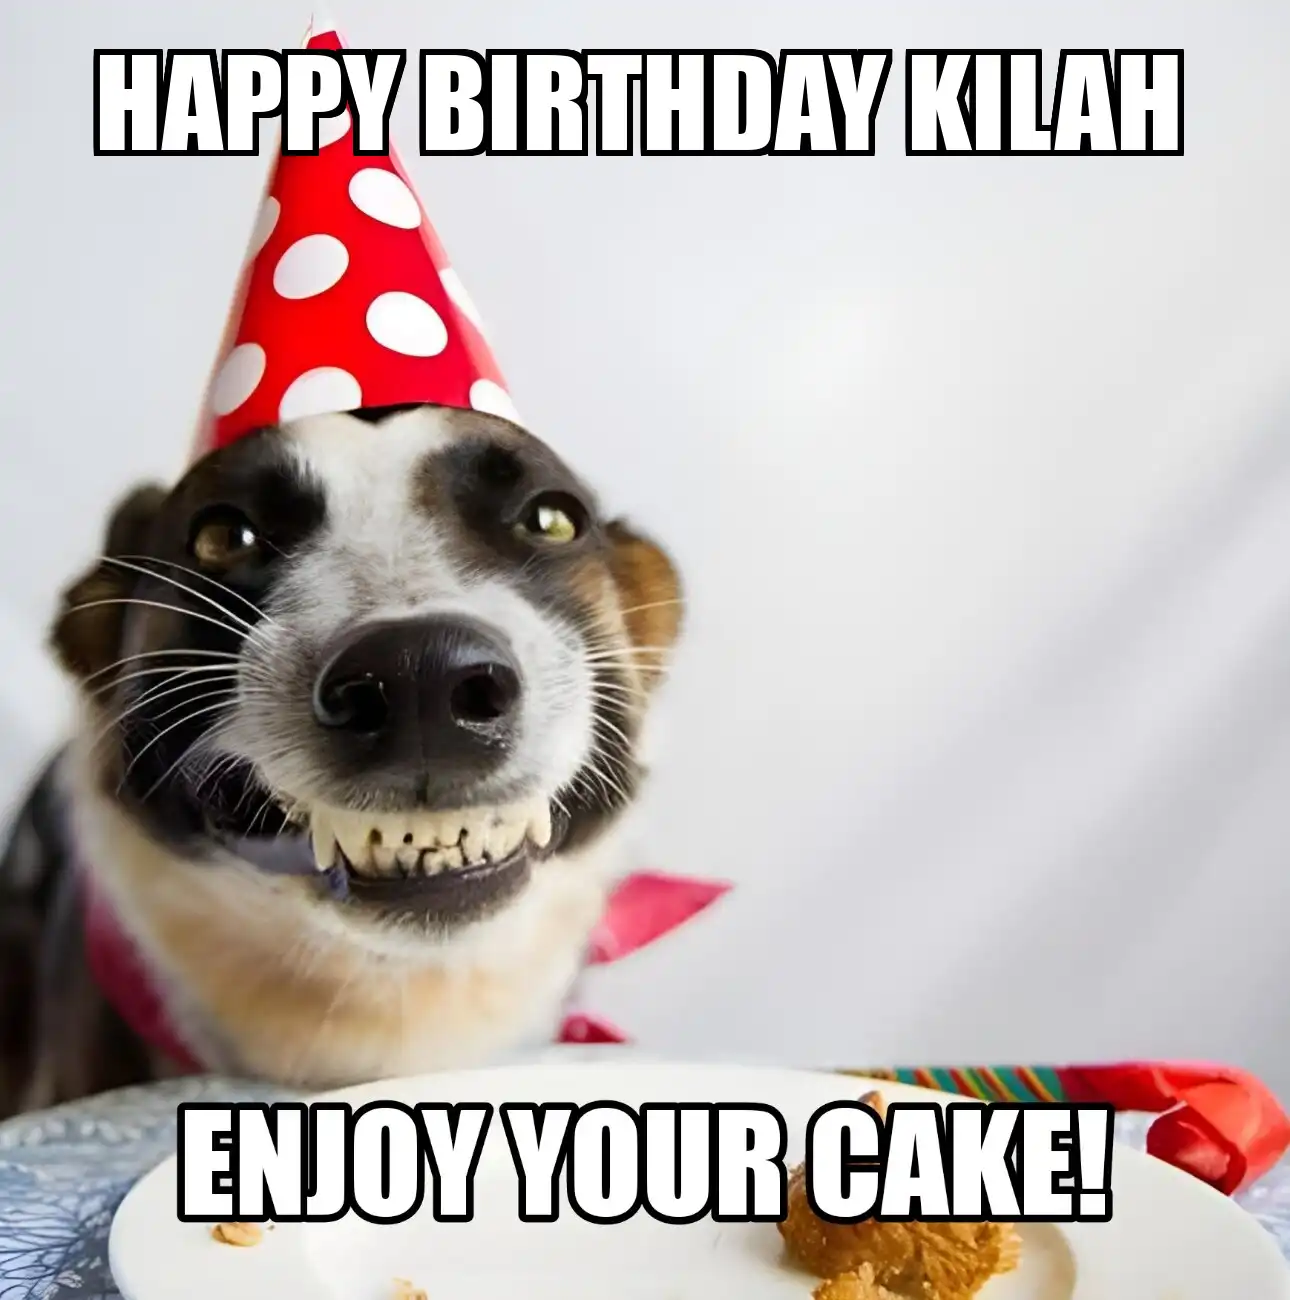 Happy Birthday Kilah Enjoy Your Cake Dog Meme